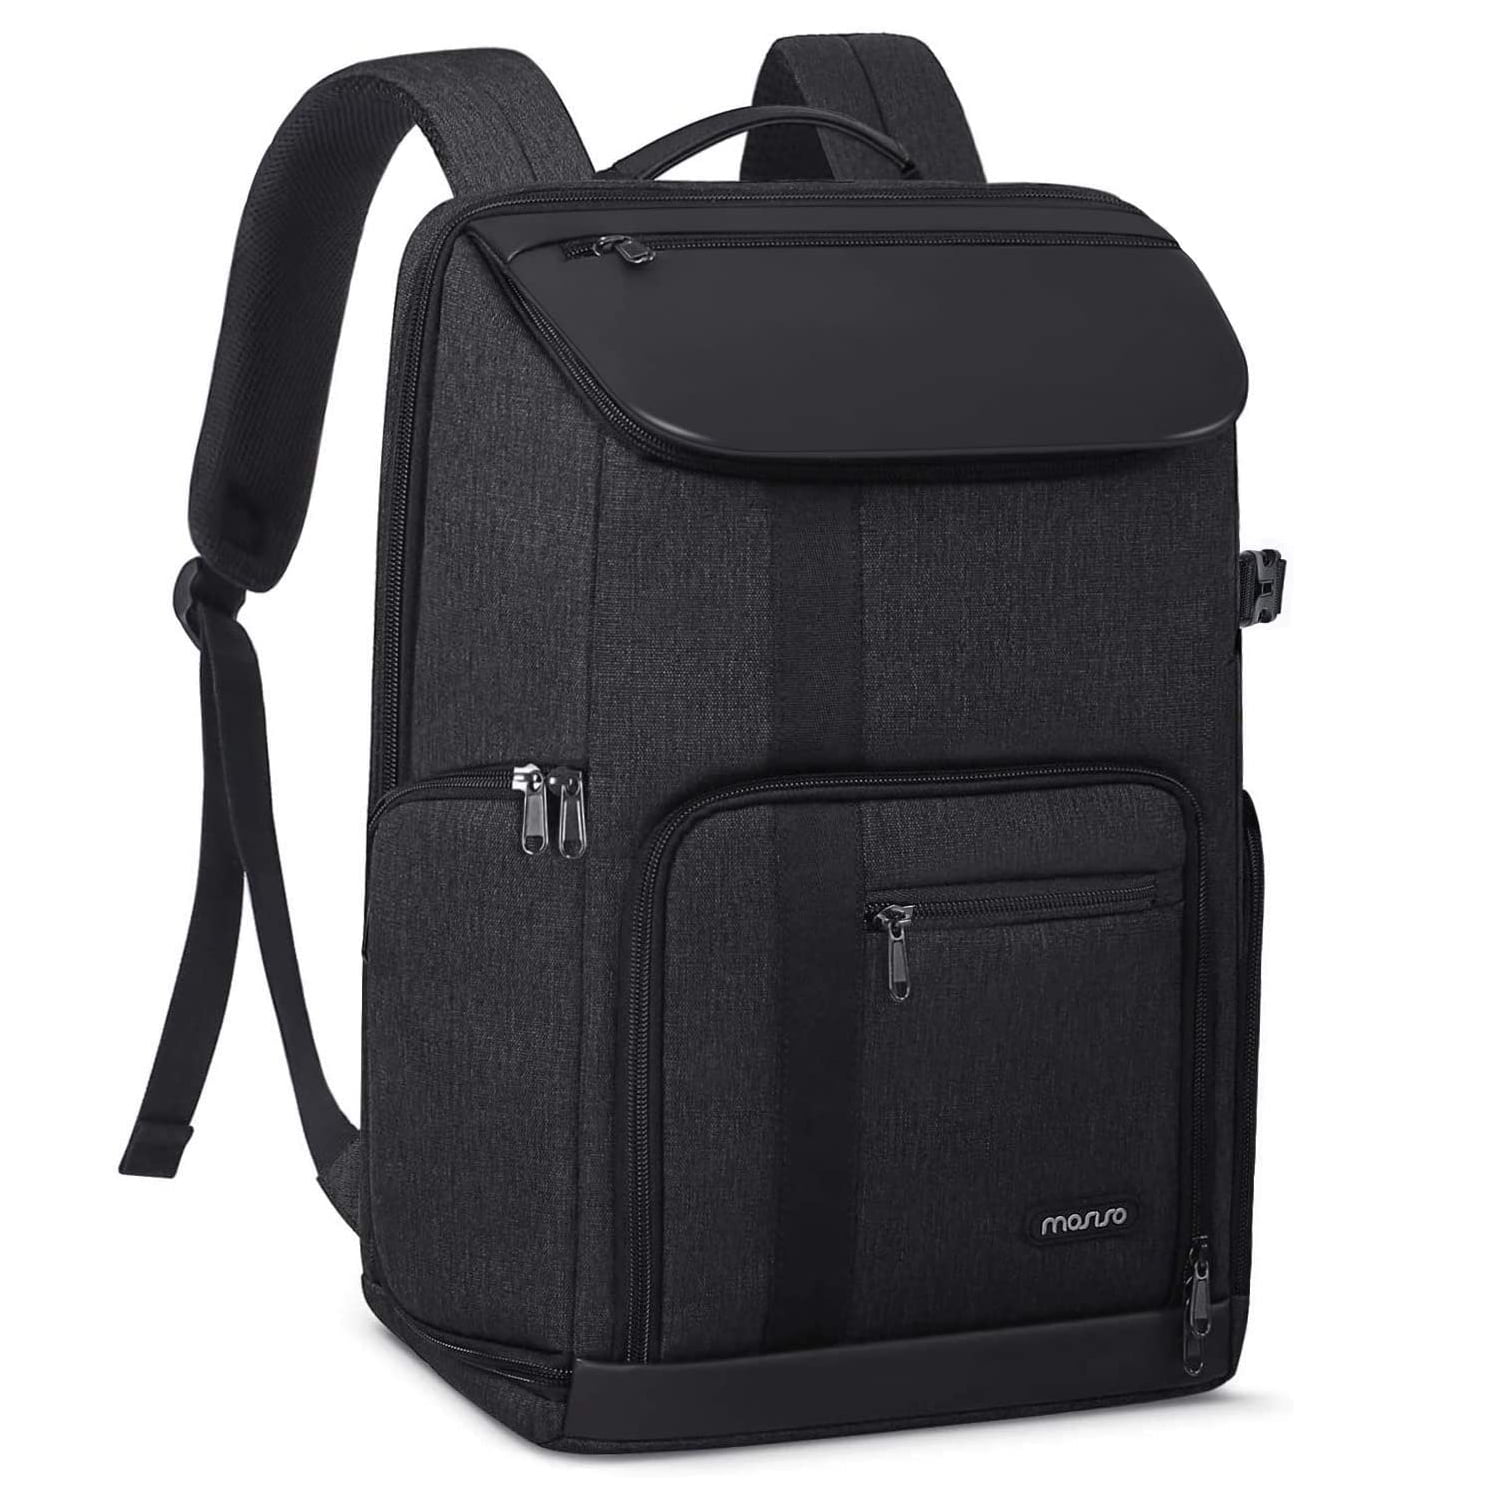 Mosiso 17 inch Camera Backpack for Canon/Nikon/Fuji/MacBook, Large ...